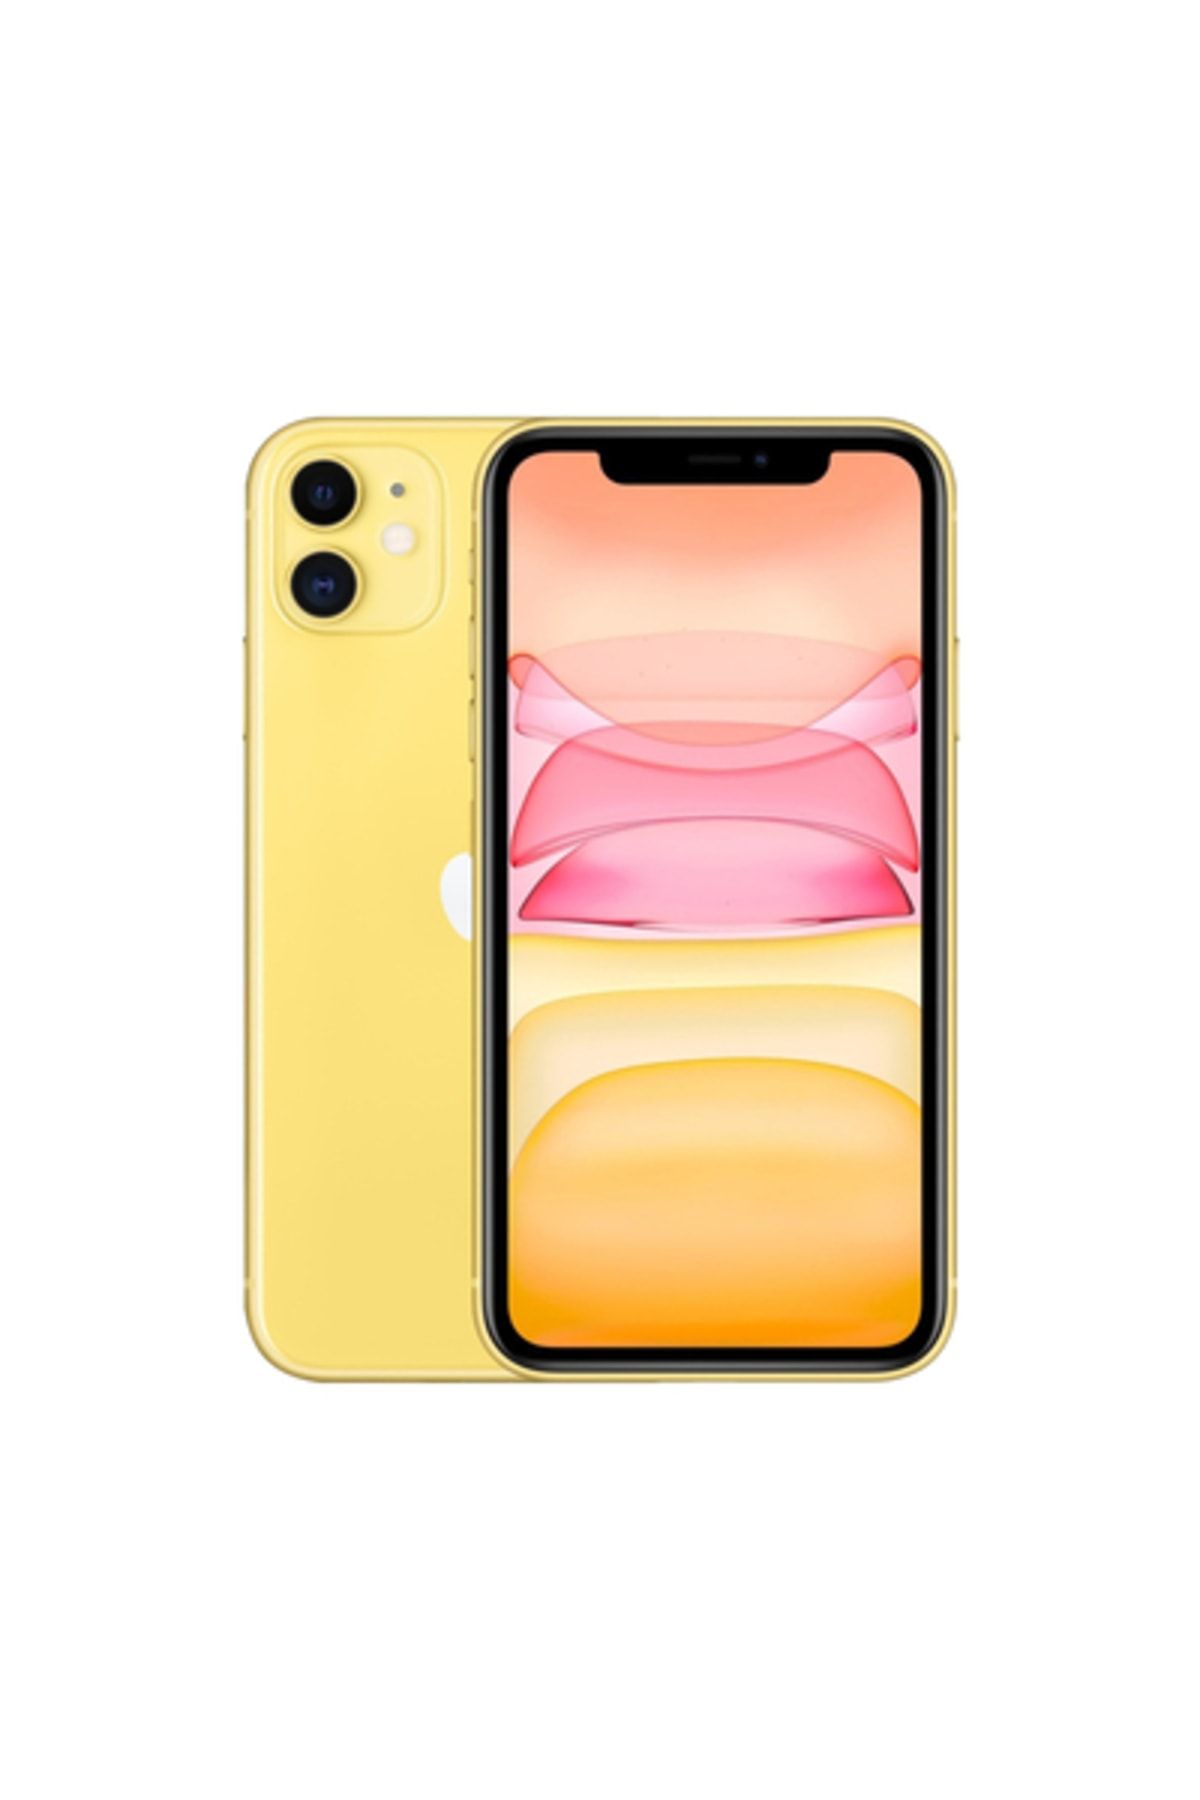 Apple Yenilenmiş Iphone 11 256 Gb Sarı B Grade